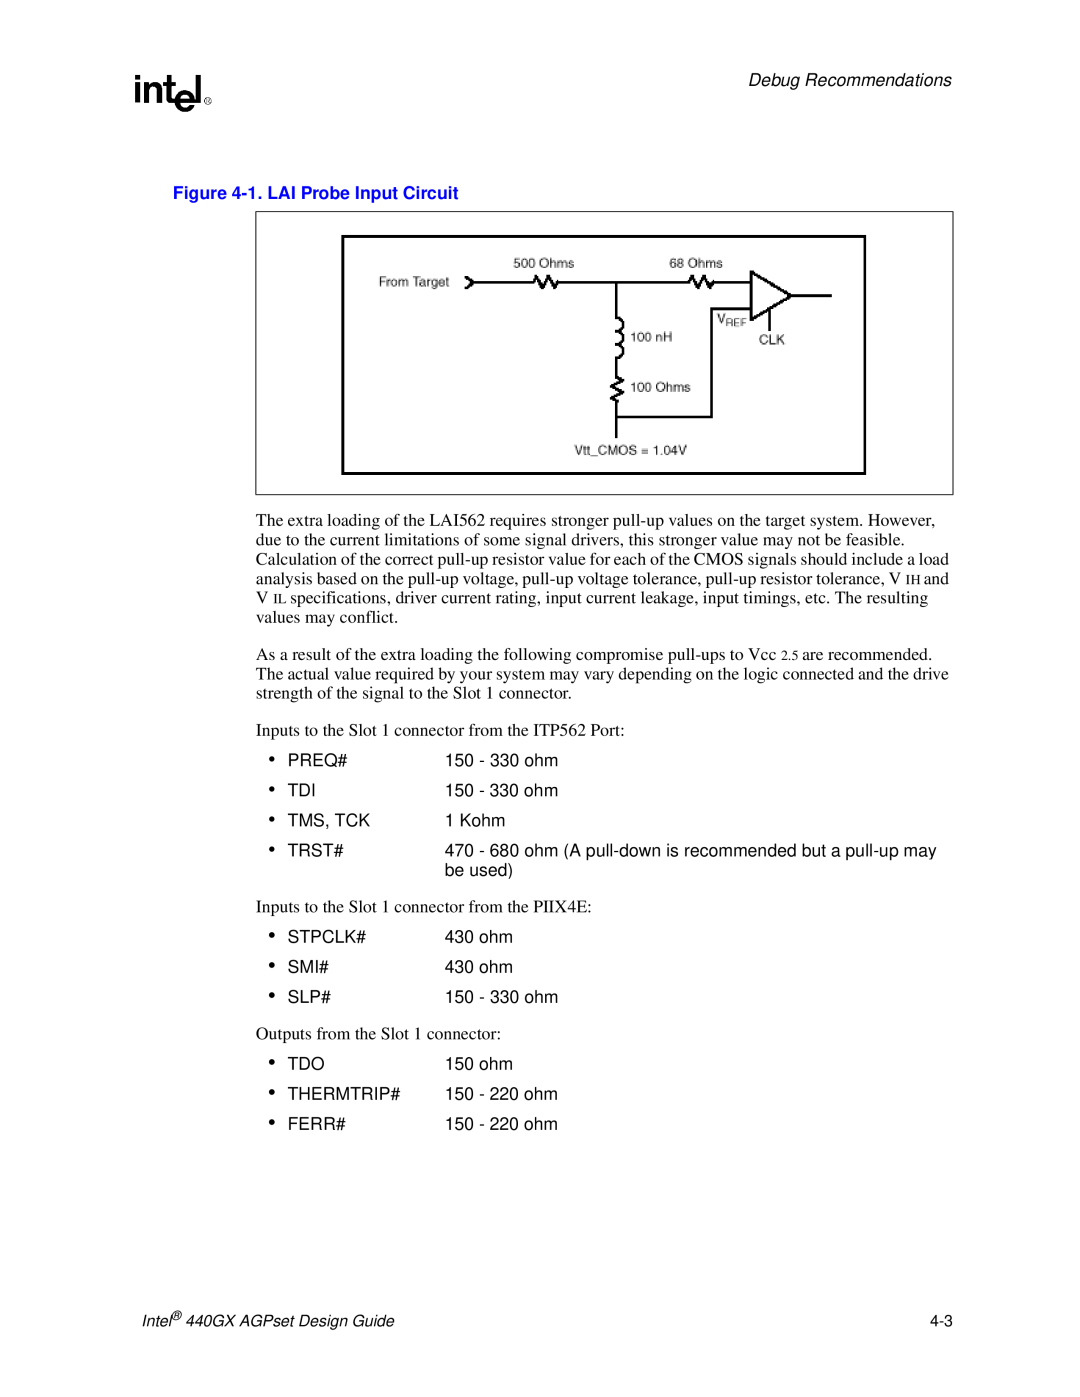 Intel 440GX manual 1. LAI Probe Input Circuit, Debug Recommendations 